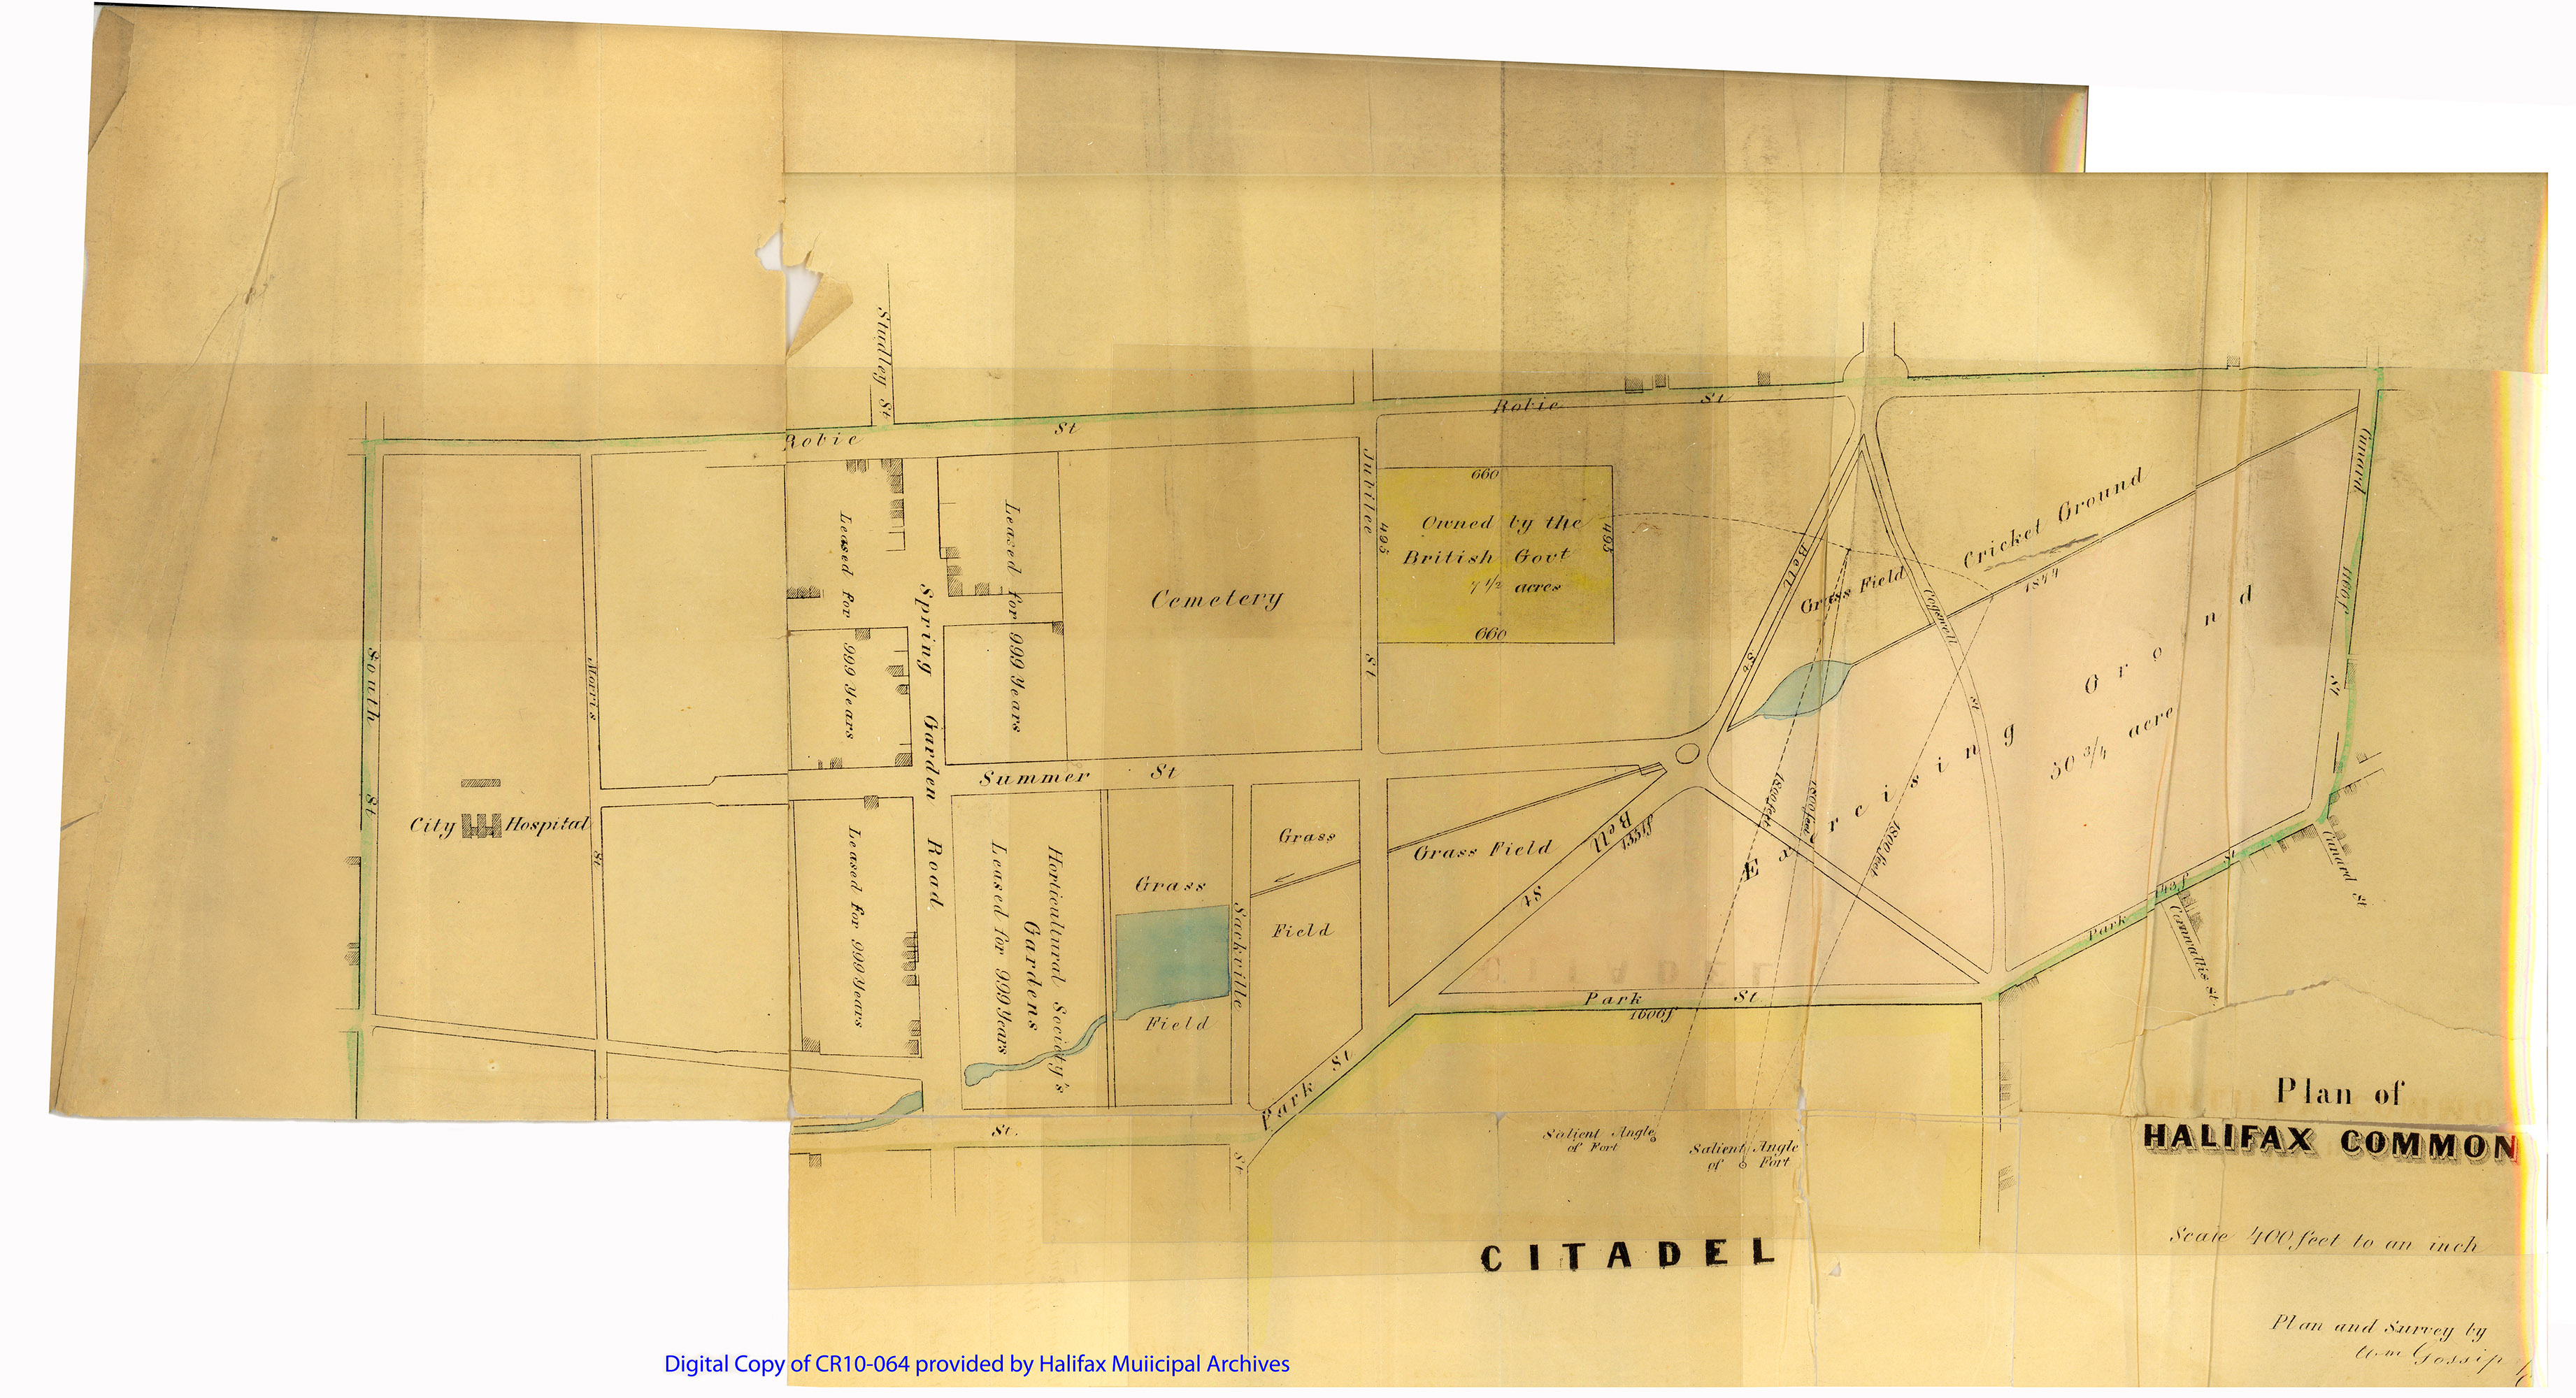 Digital copy of plan of Halifax mon showing its boundaries between Robie Cunard Park